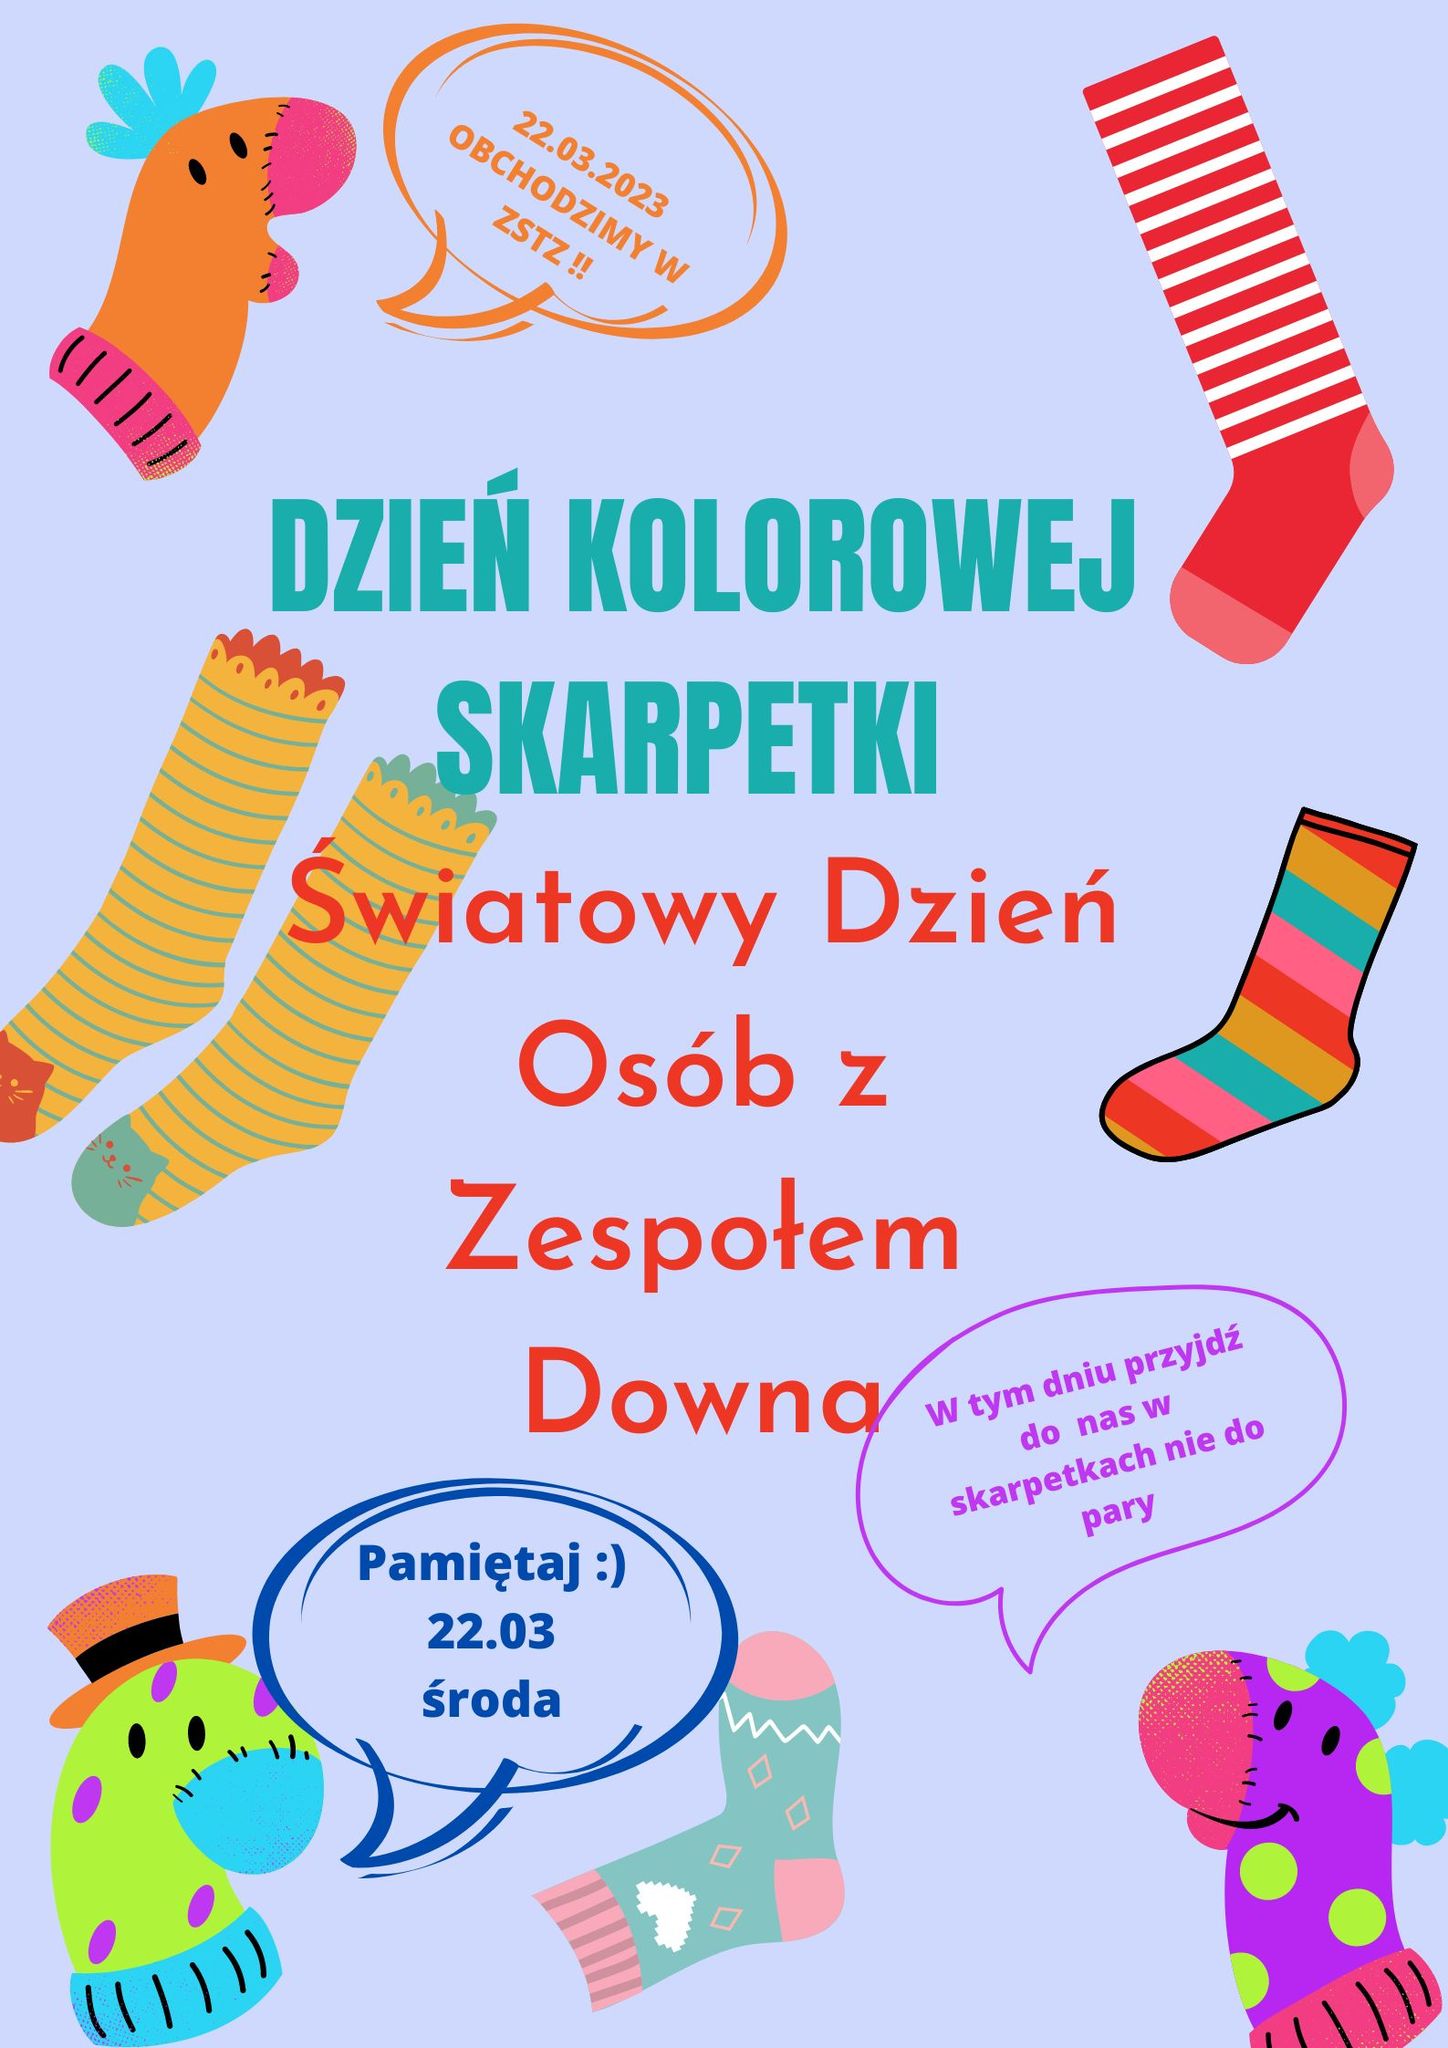 Read more about the article Dzień Kolorowej Skarpetki